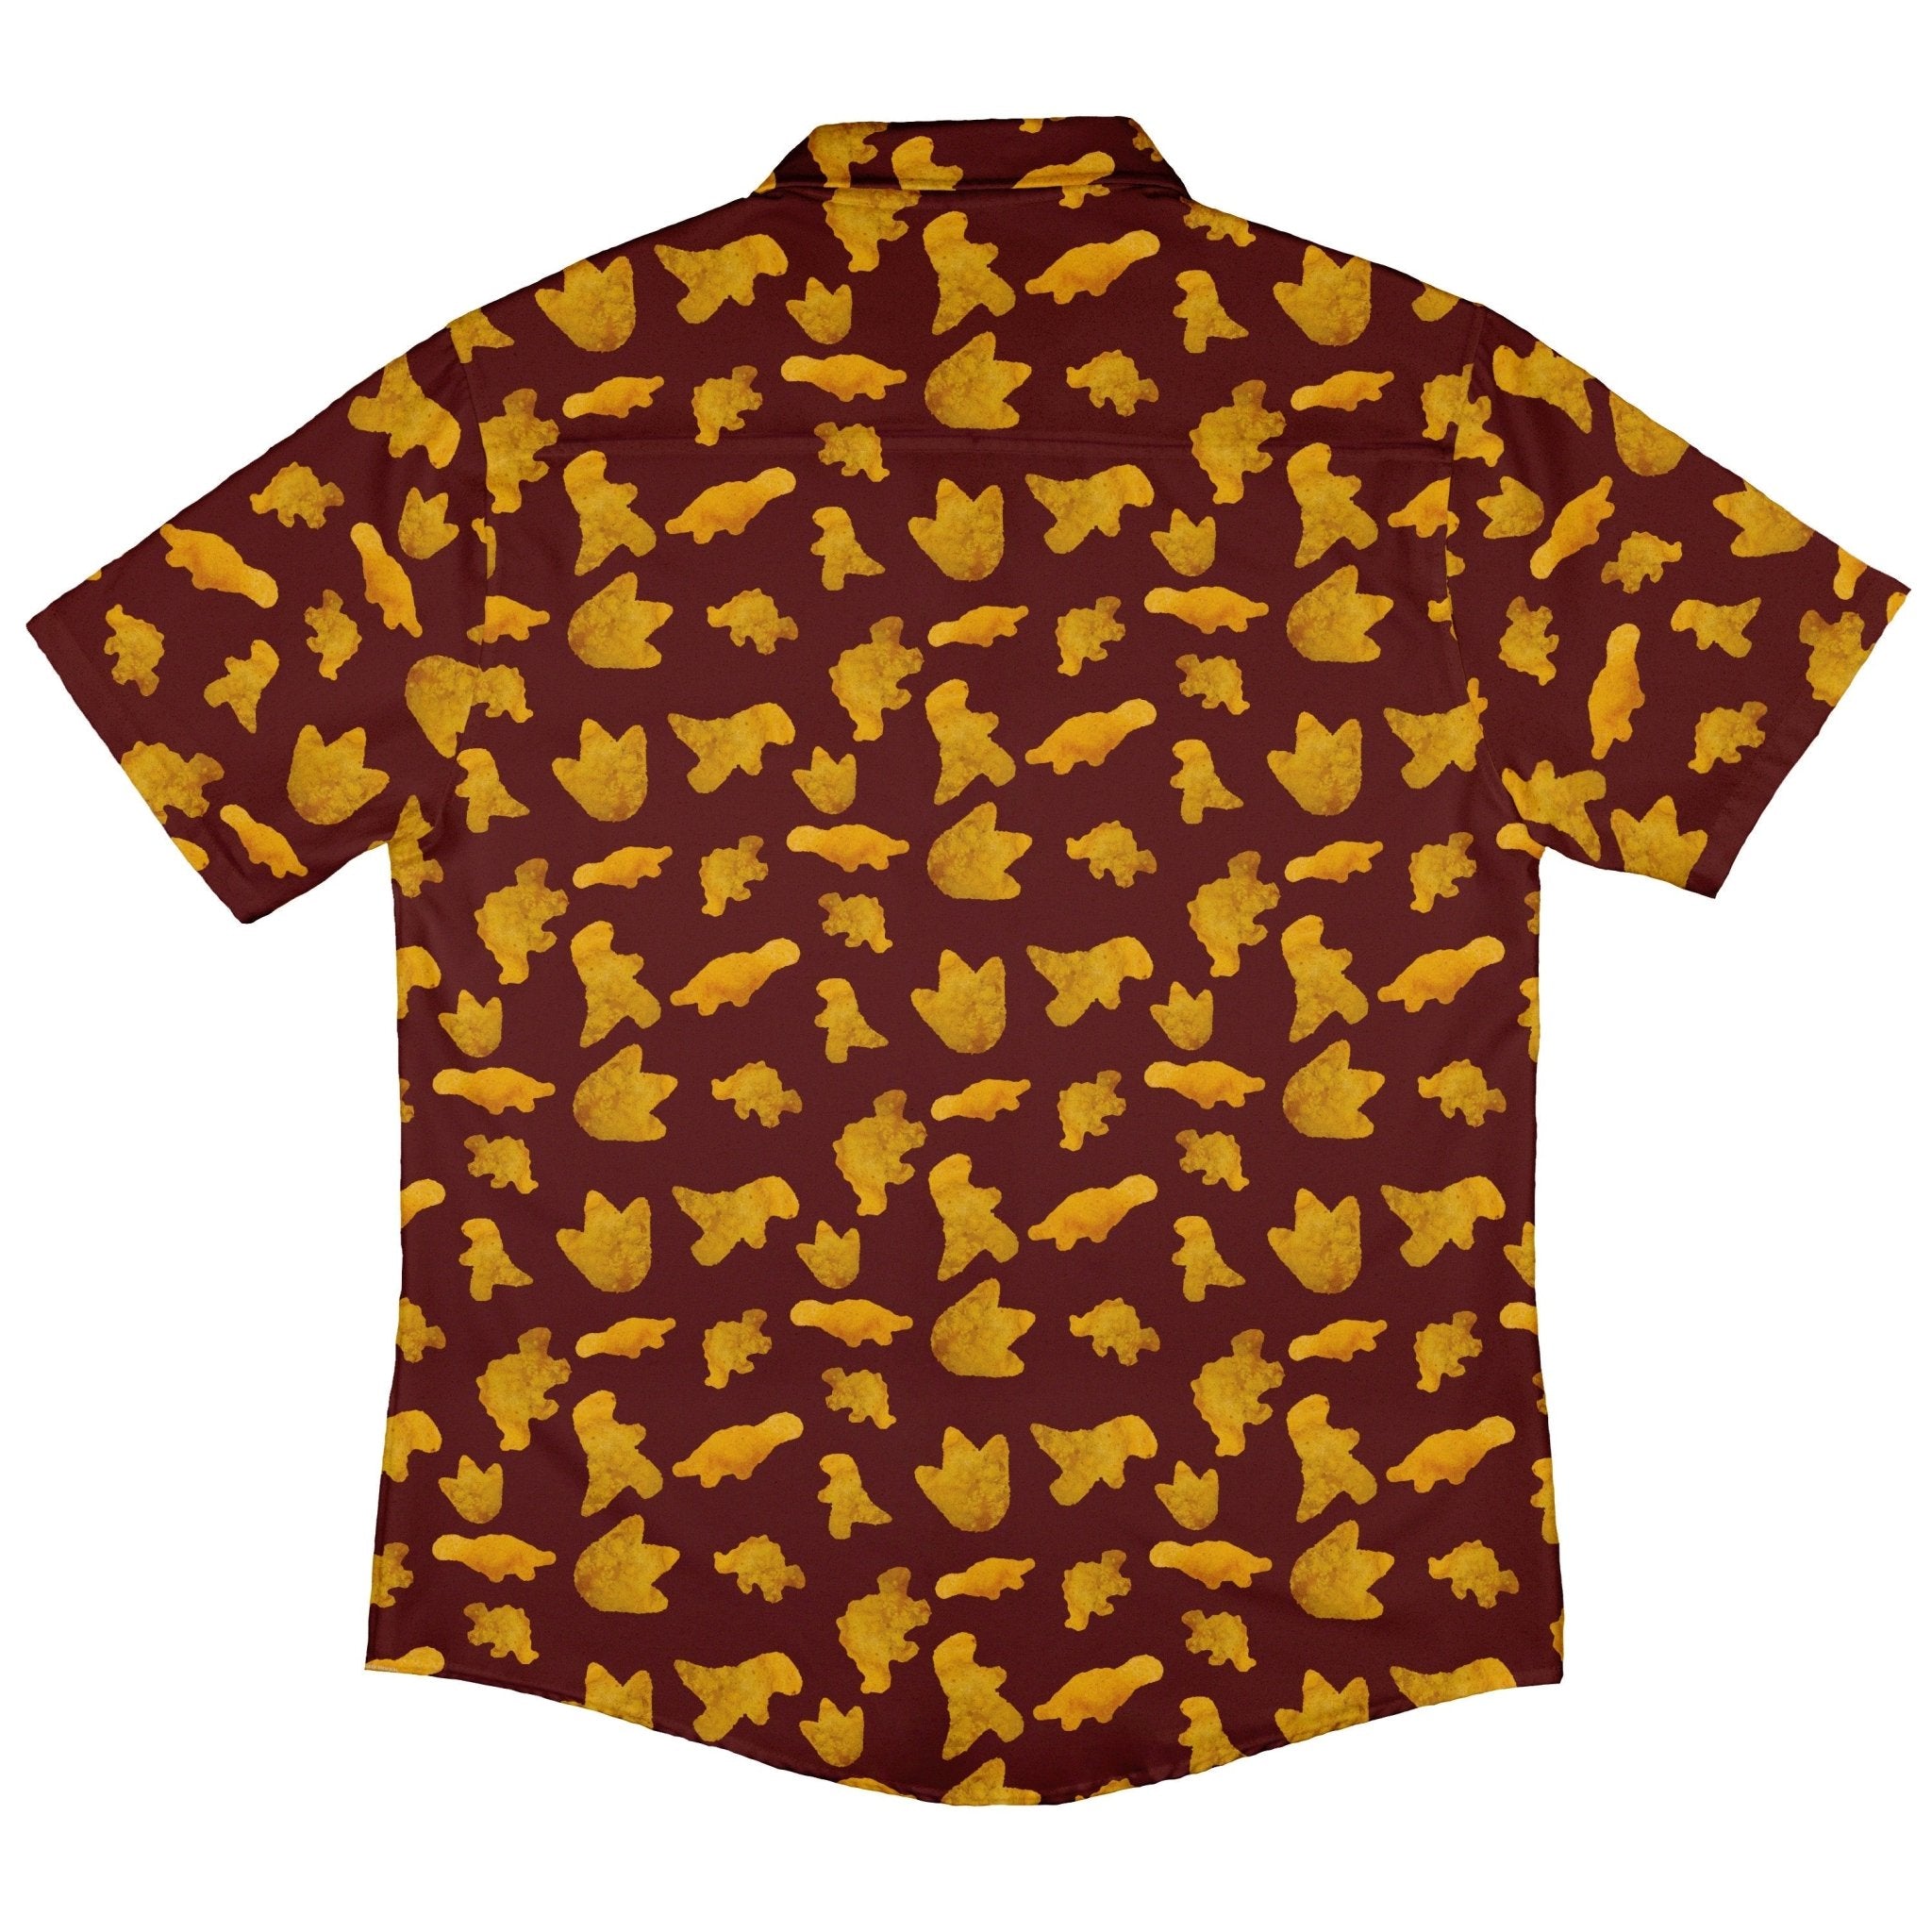 Dinosaur Chicken Nuggets Red Button Up Shirt - adult sizing - Design by Random Galaxy - dinosaur print